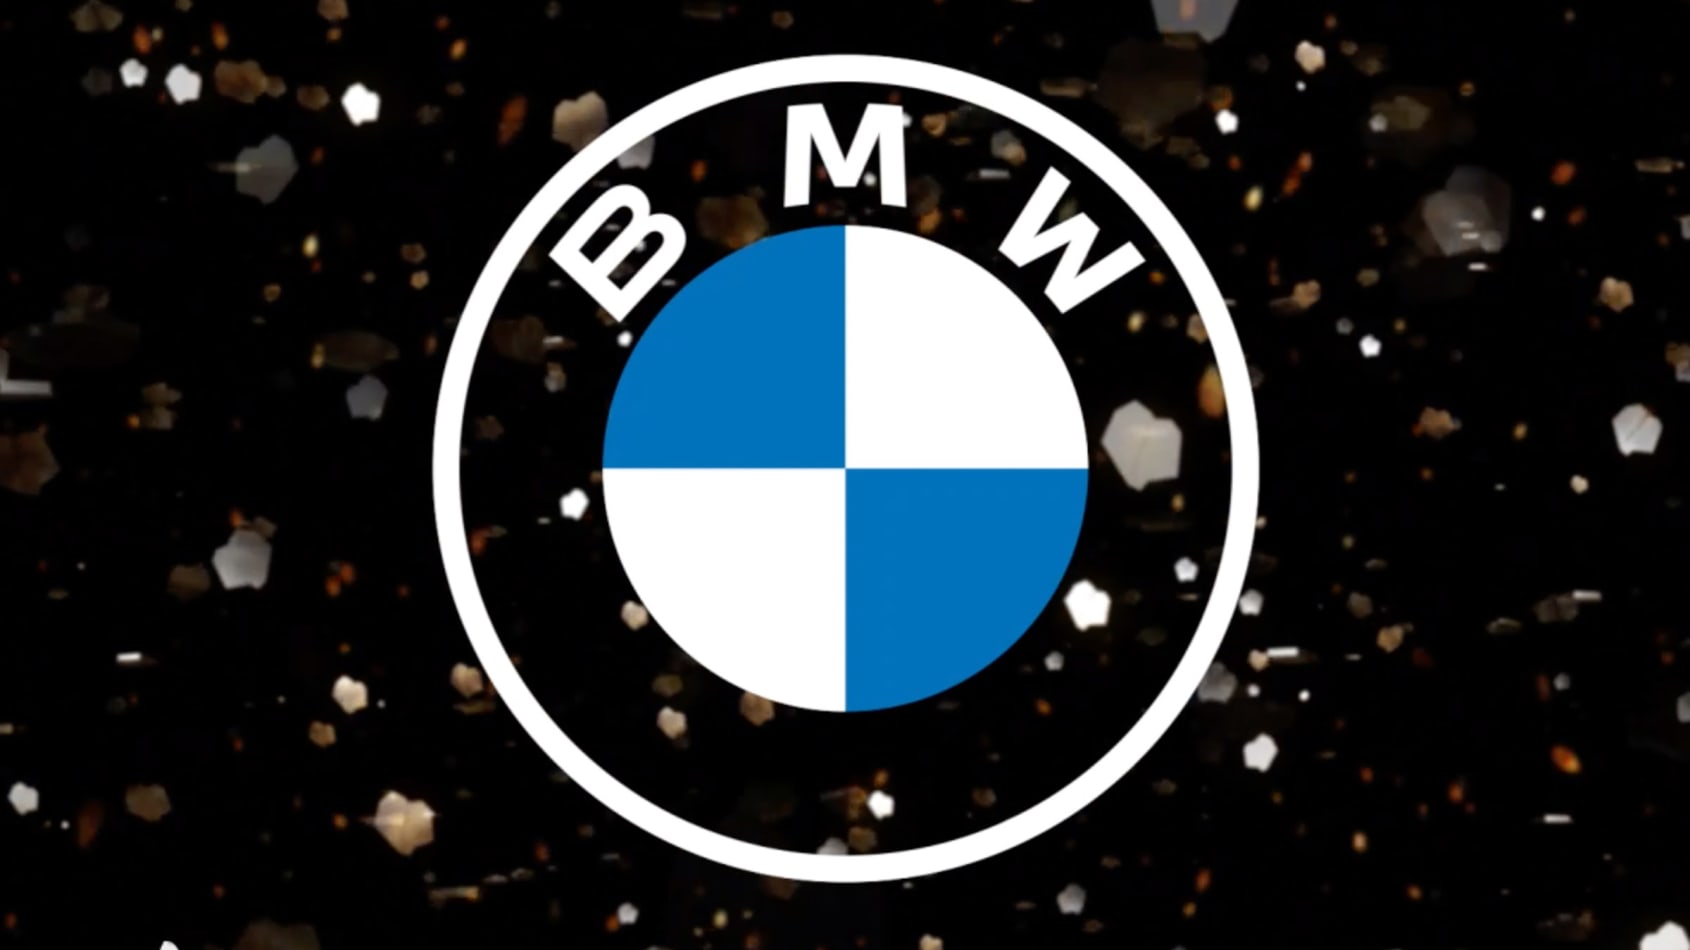 aria-label="BMW logo 2020"